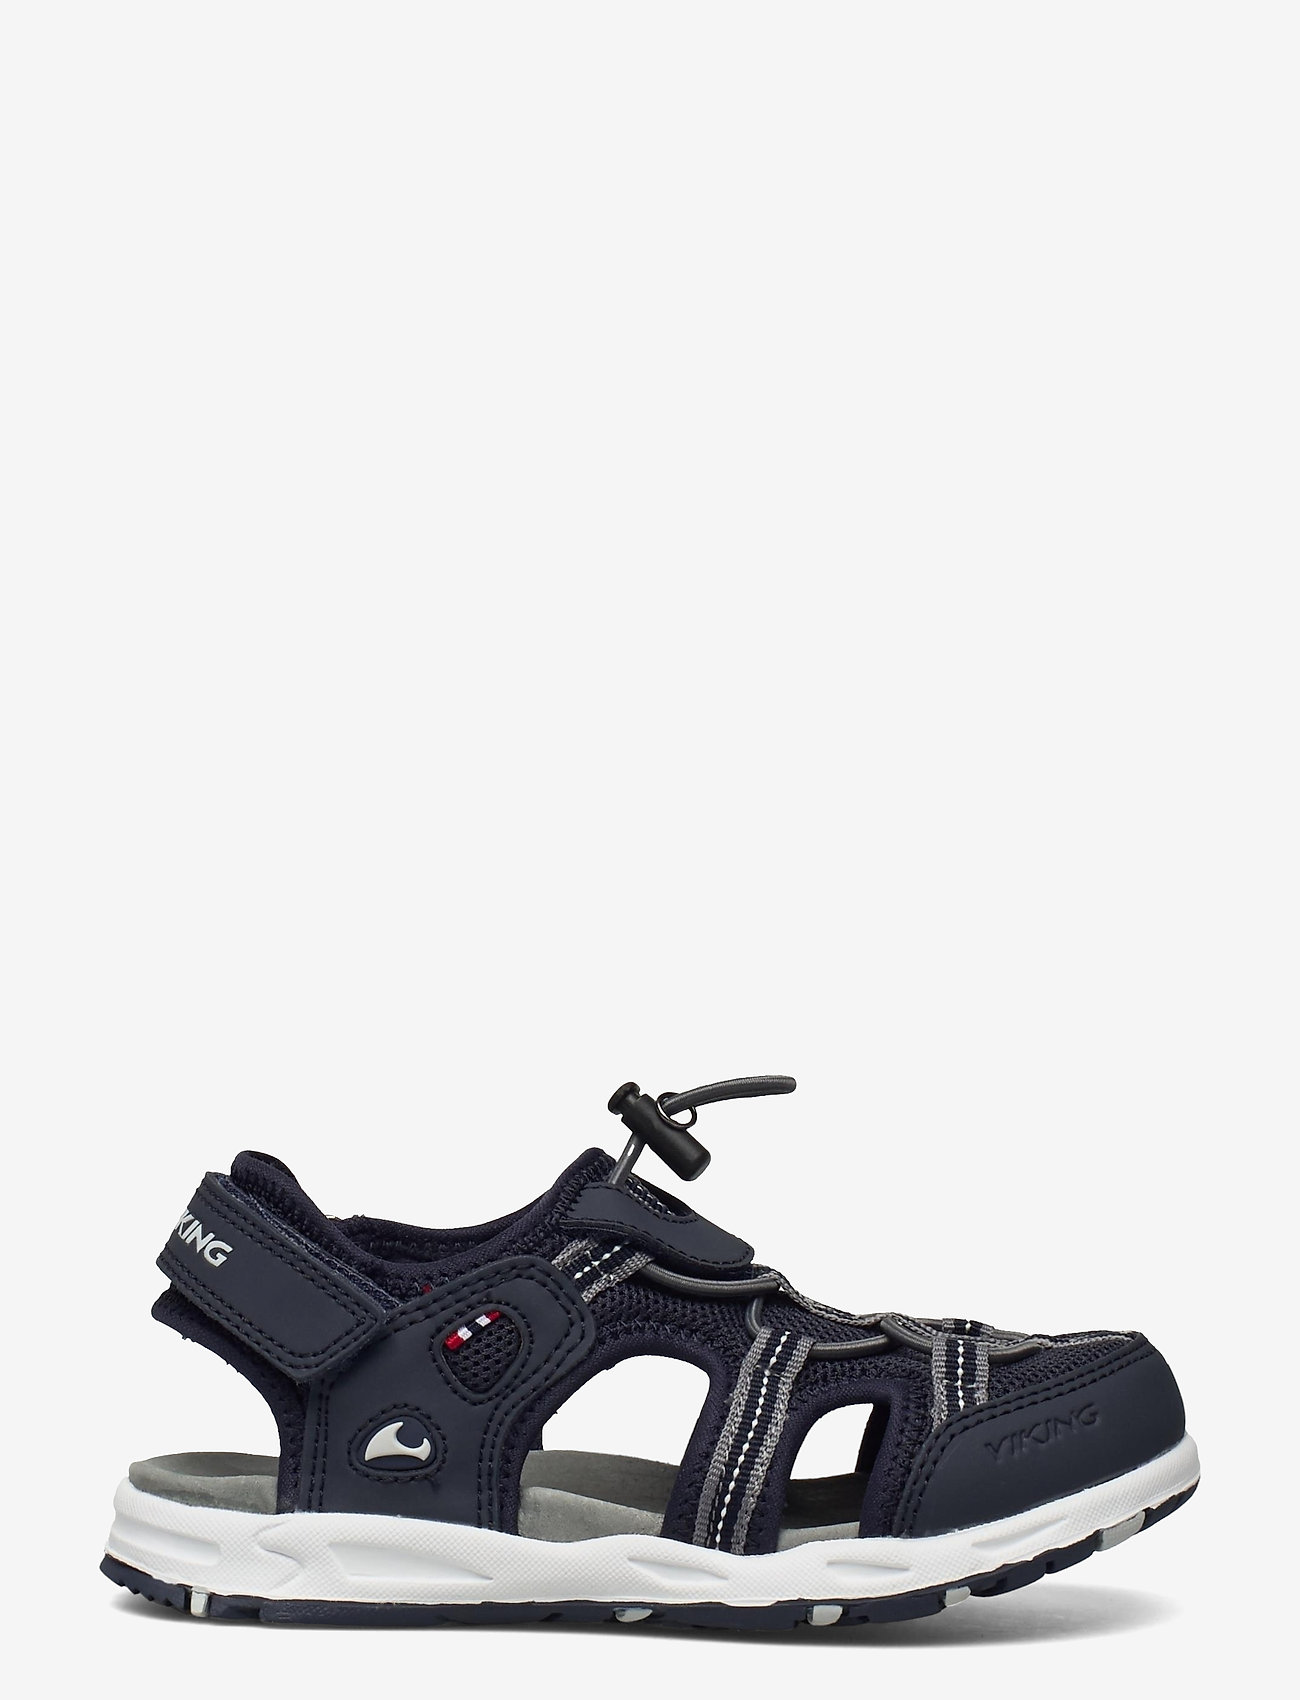 Viking - THRILL - strap sandals - navy/grey - 1